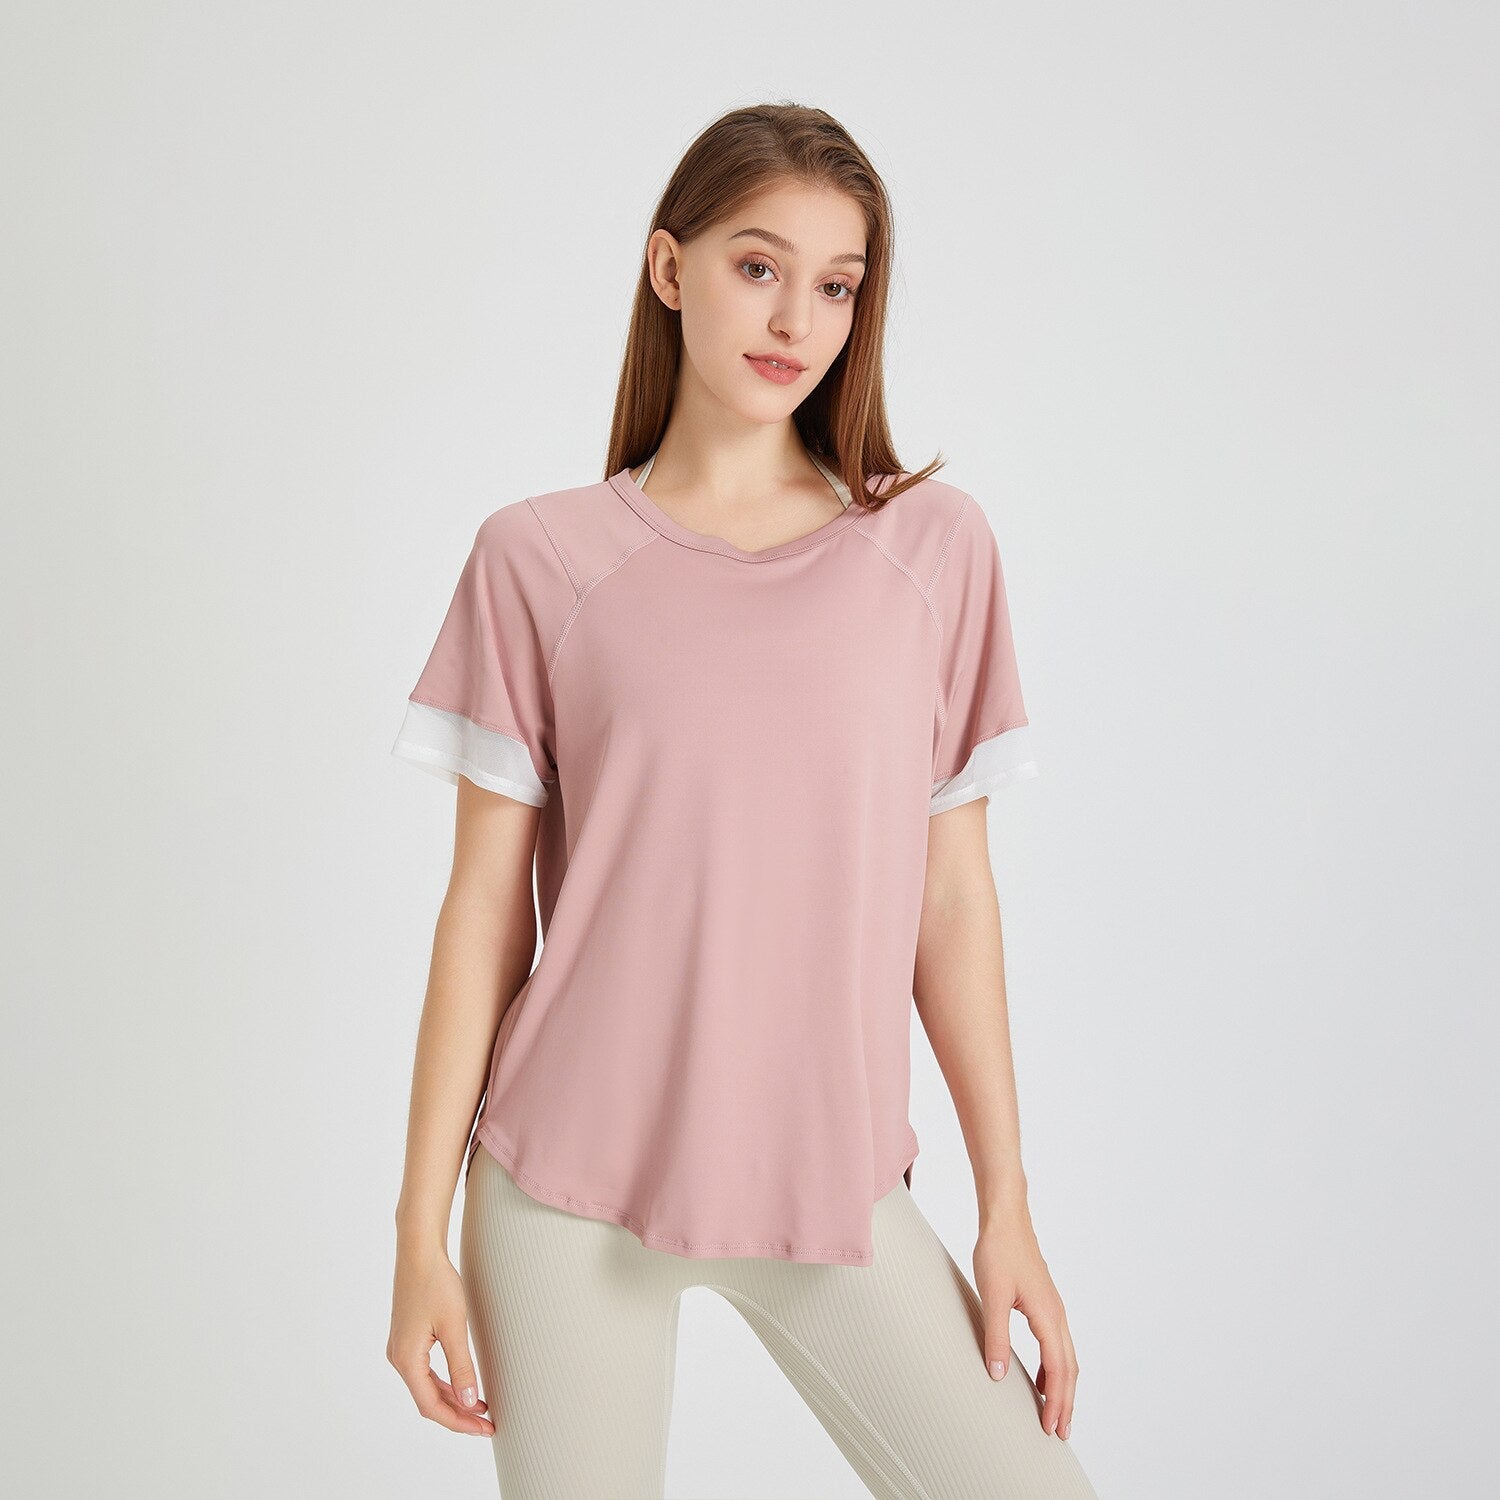 T-shirt Yoga Comfy - rose / S